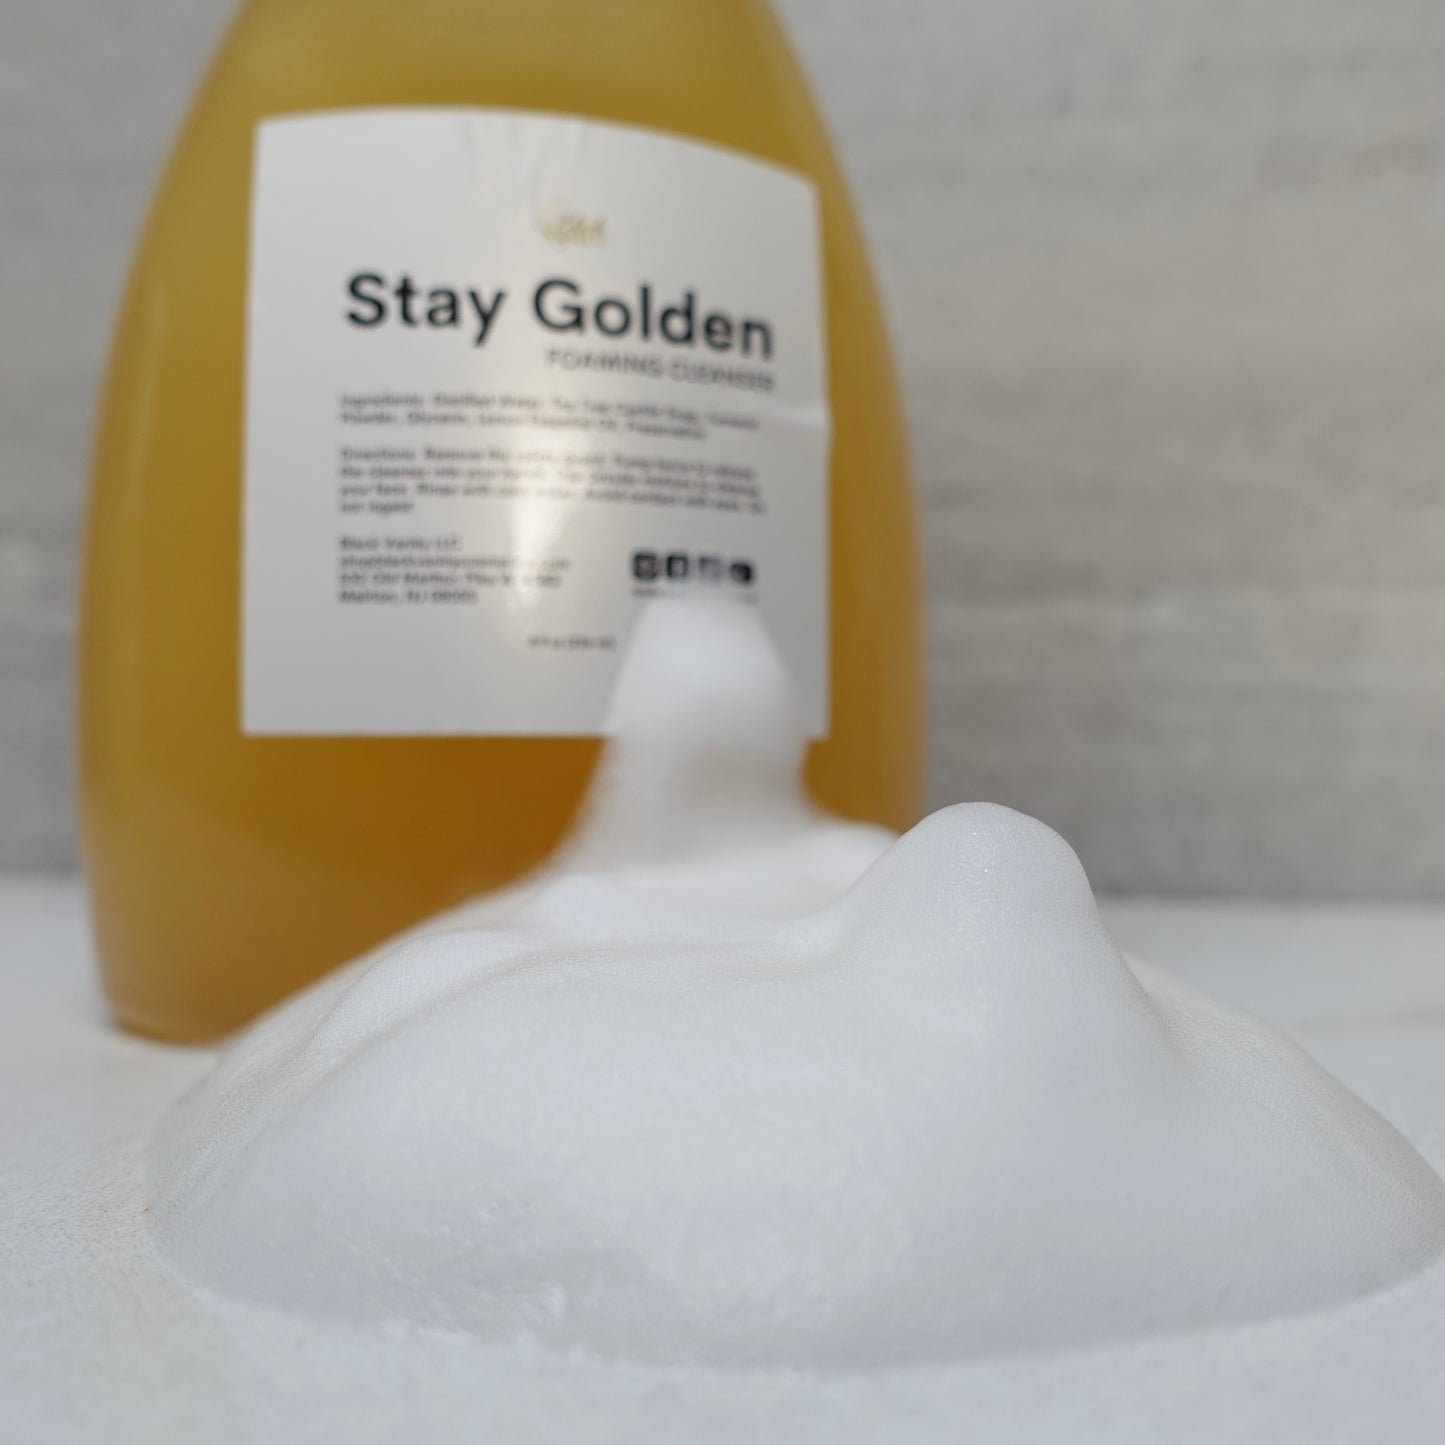 Stay Golden Foaming Cleanser